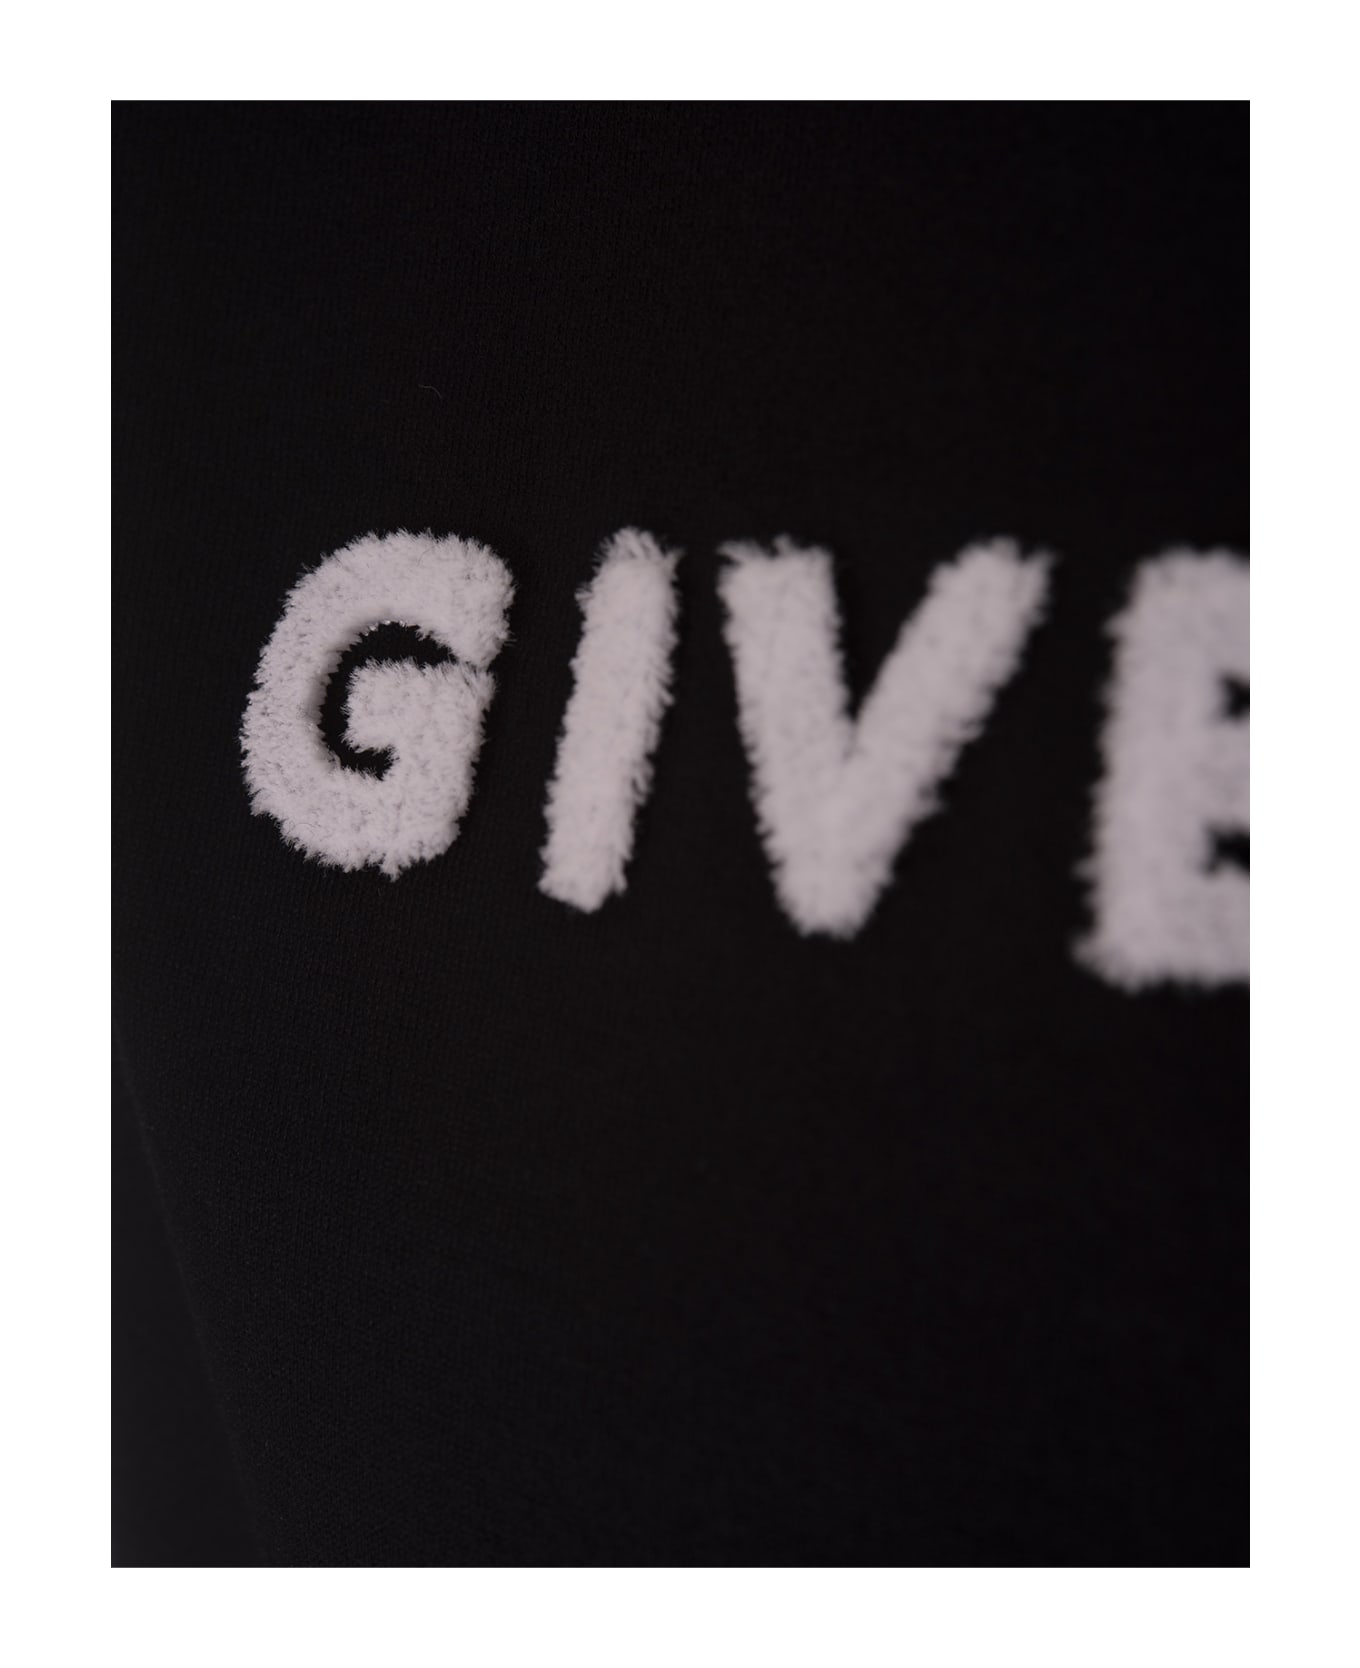 Givenchy 4g Slim T-shirt In Black Cotton - Black